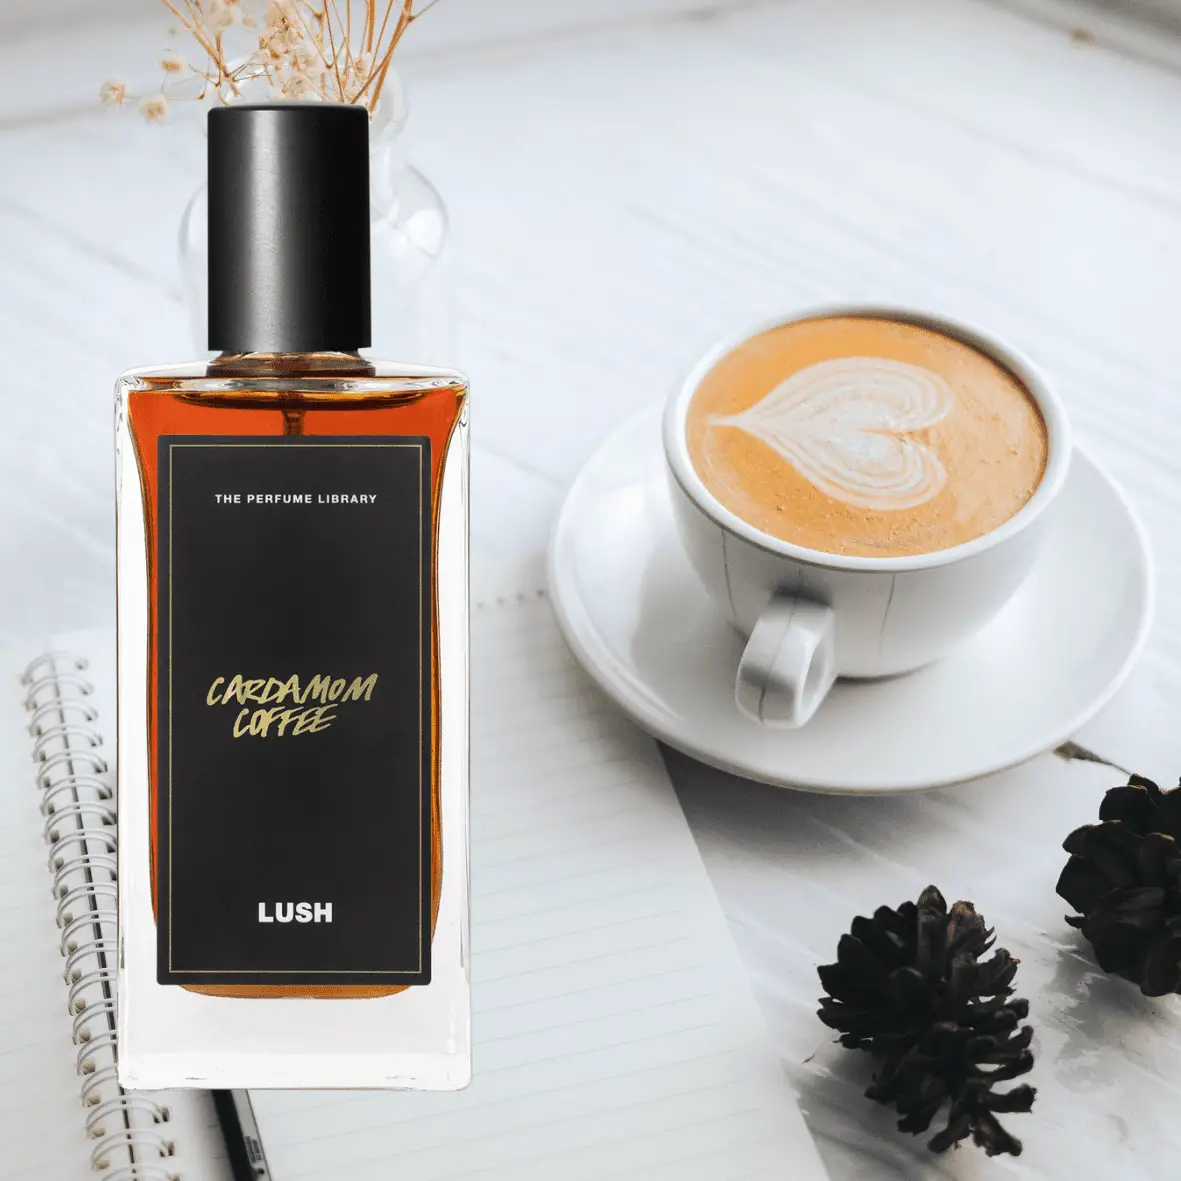 Lush Cardamom Coffee
Best Coffee Perfumes